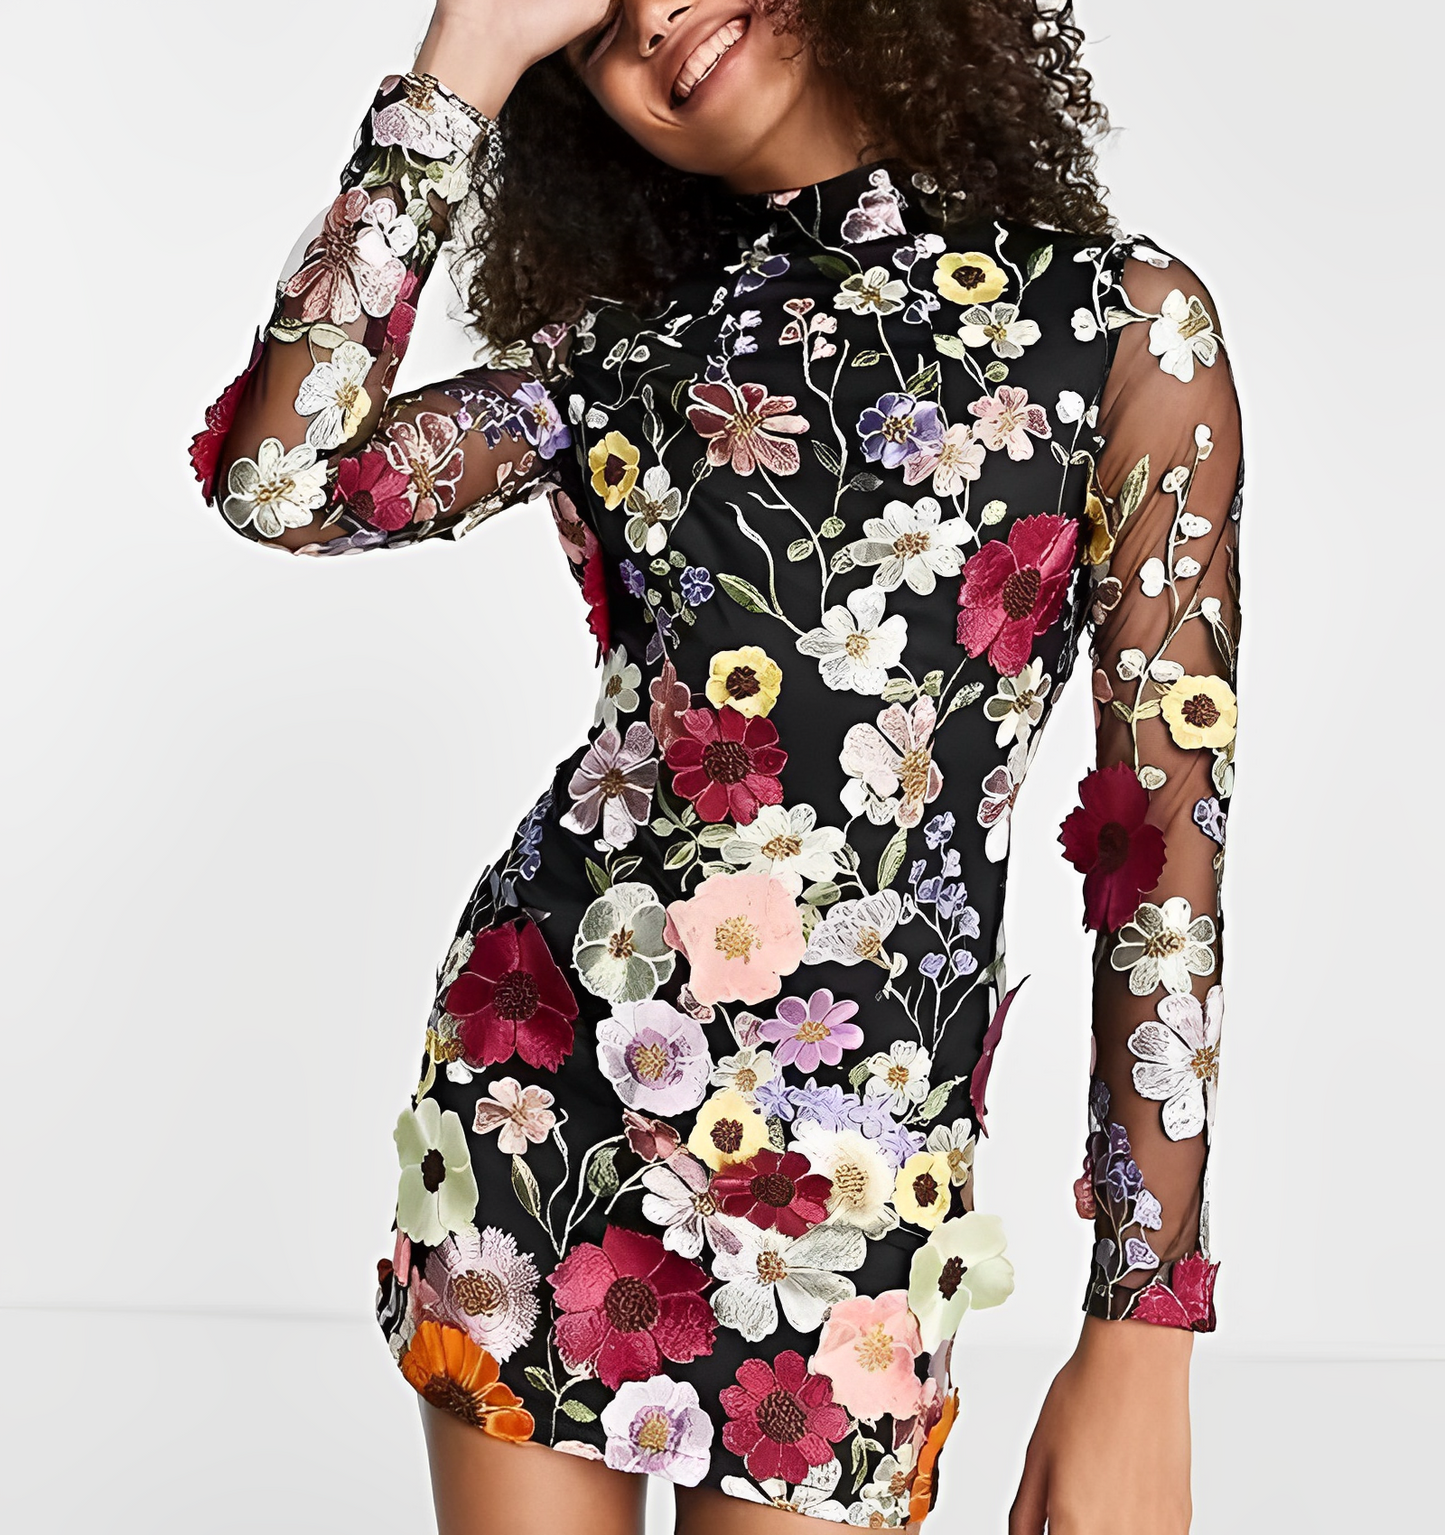 Daisy™ - Elegant floral dress 